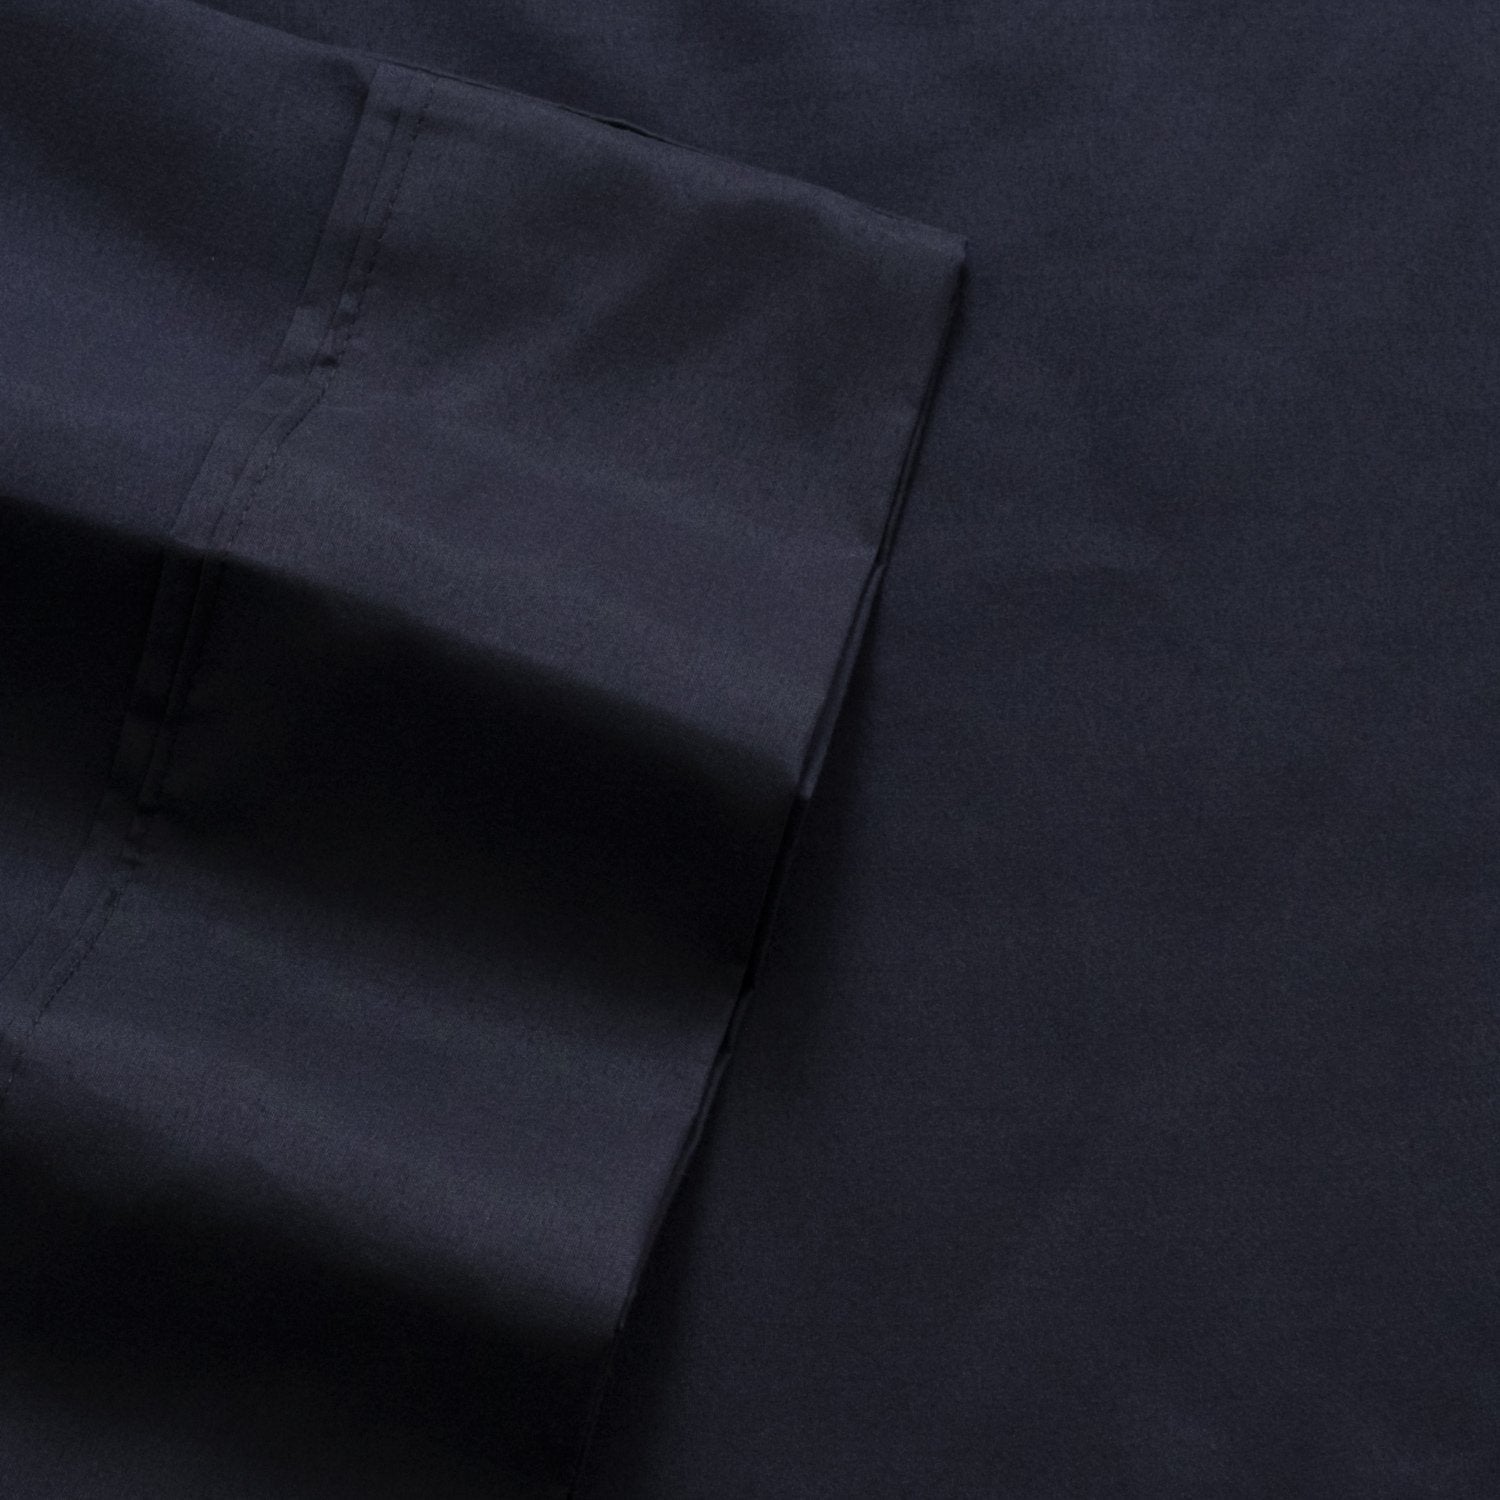 Deluxe 6-Piece Bed Sheet Set (Navy) - Fabric